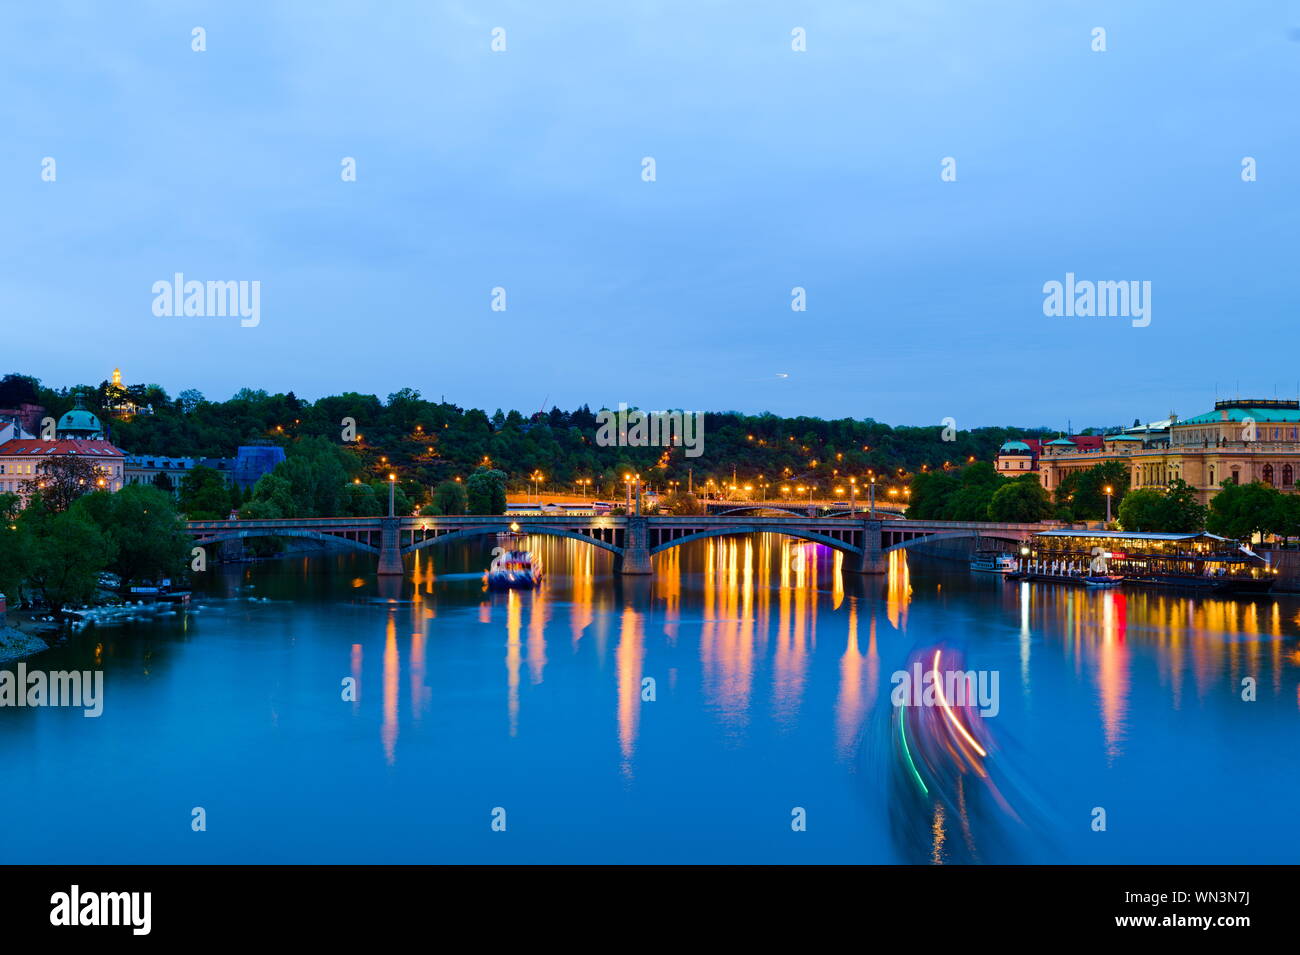 The Vltava River at night, seen from the Charles Bridge, Prague, Czech Republic Stock Photo